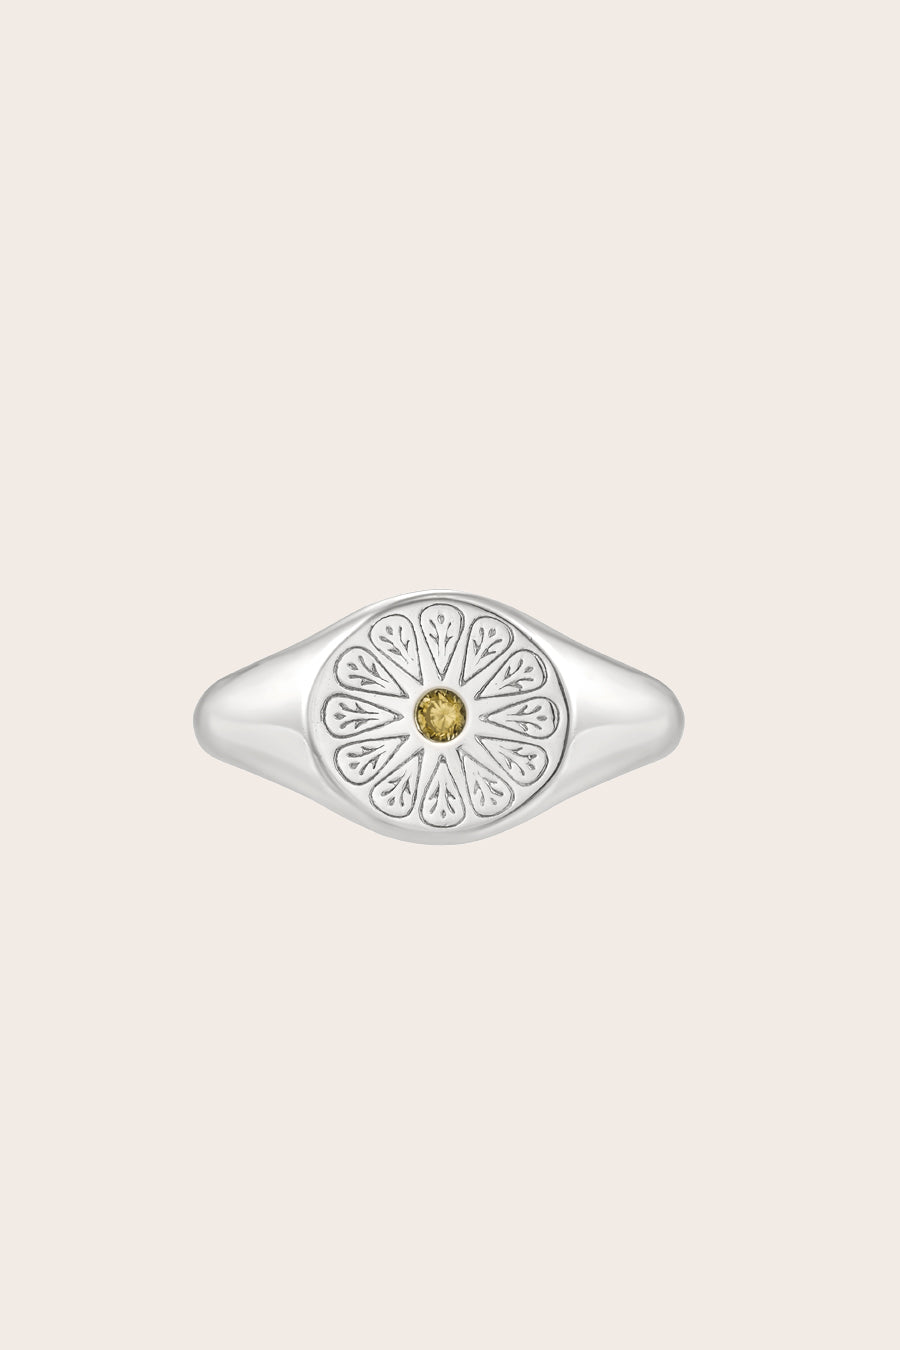 Silver August Peridot Signet Birthstone Ring on cream background